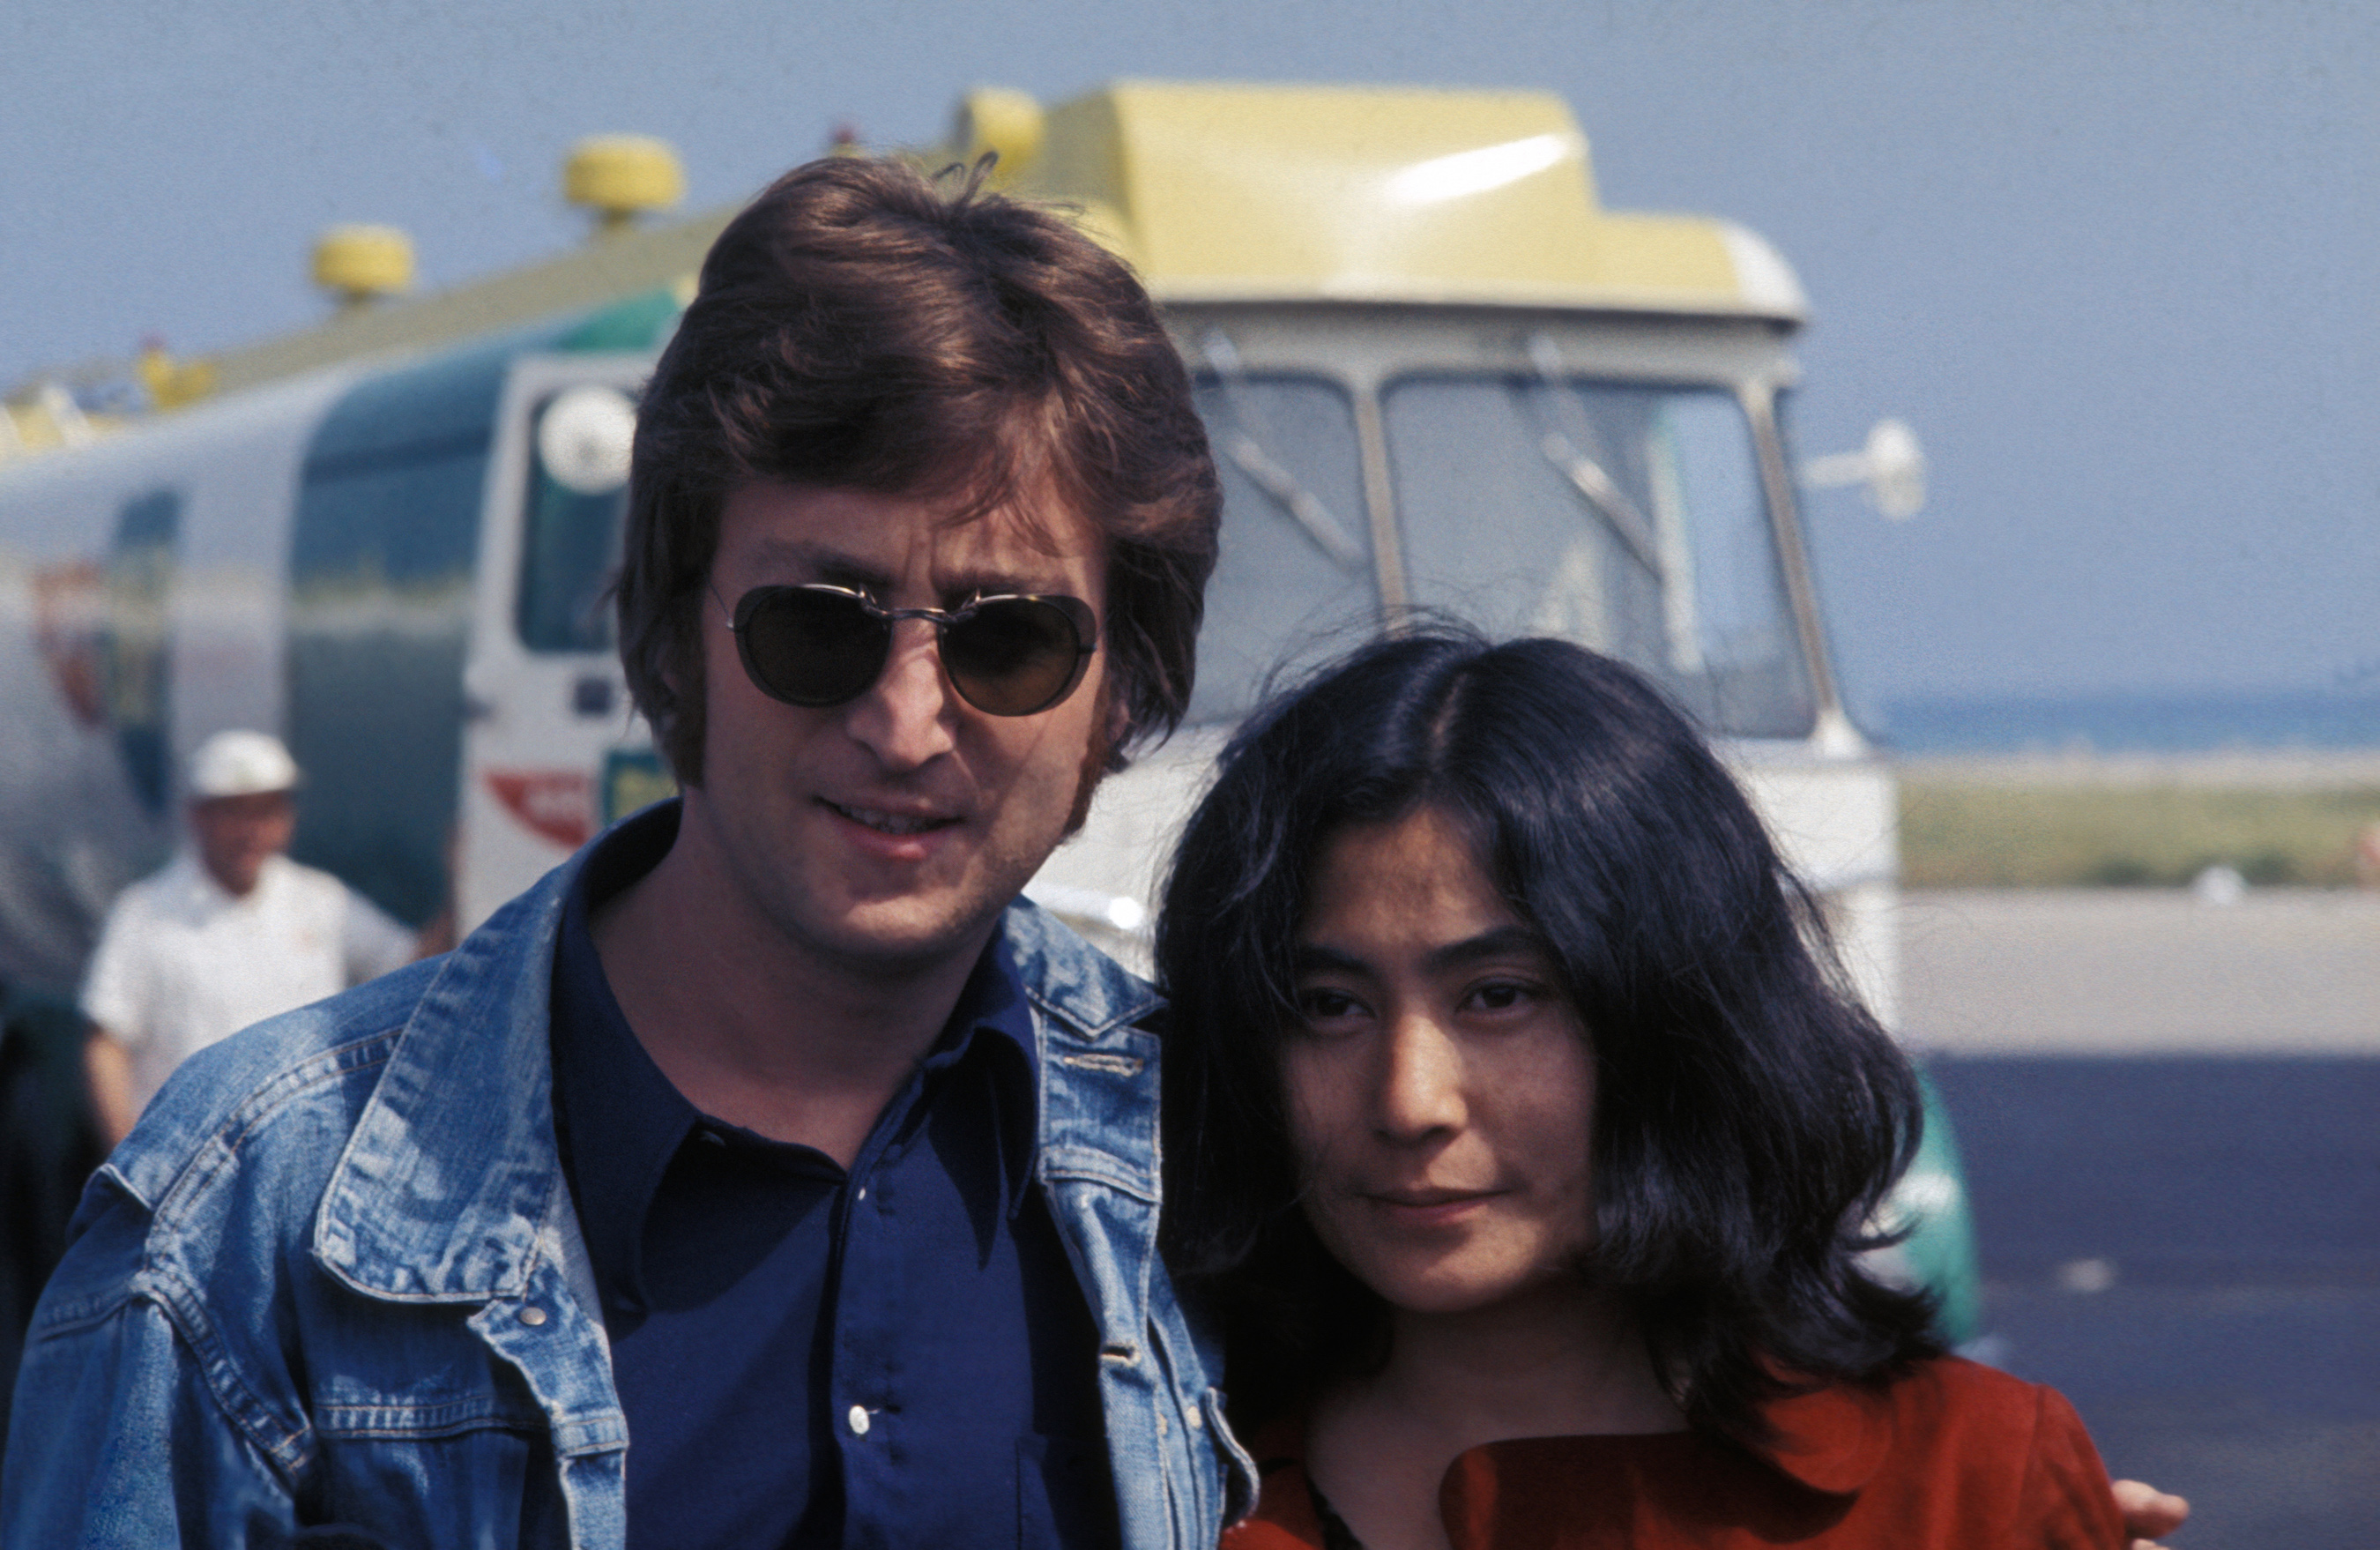 New Documentary about John Lennon and Yoko One Tells Story of ‘Imagine’